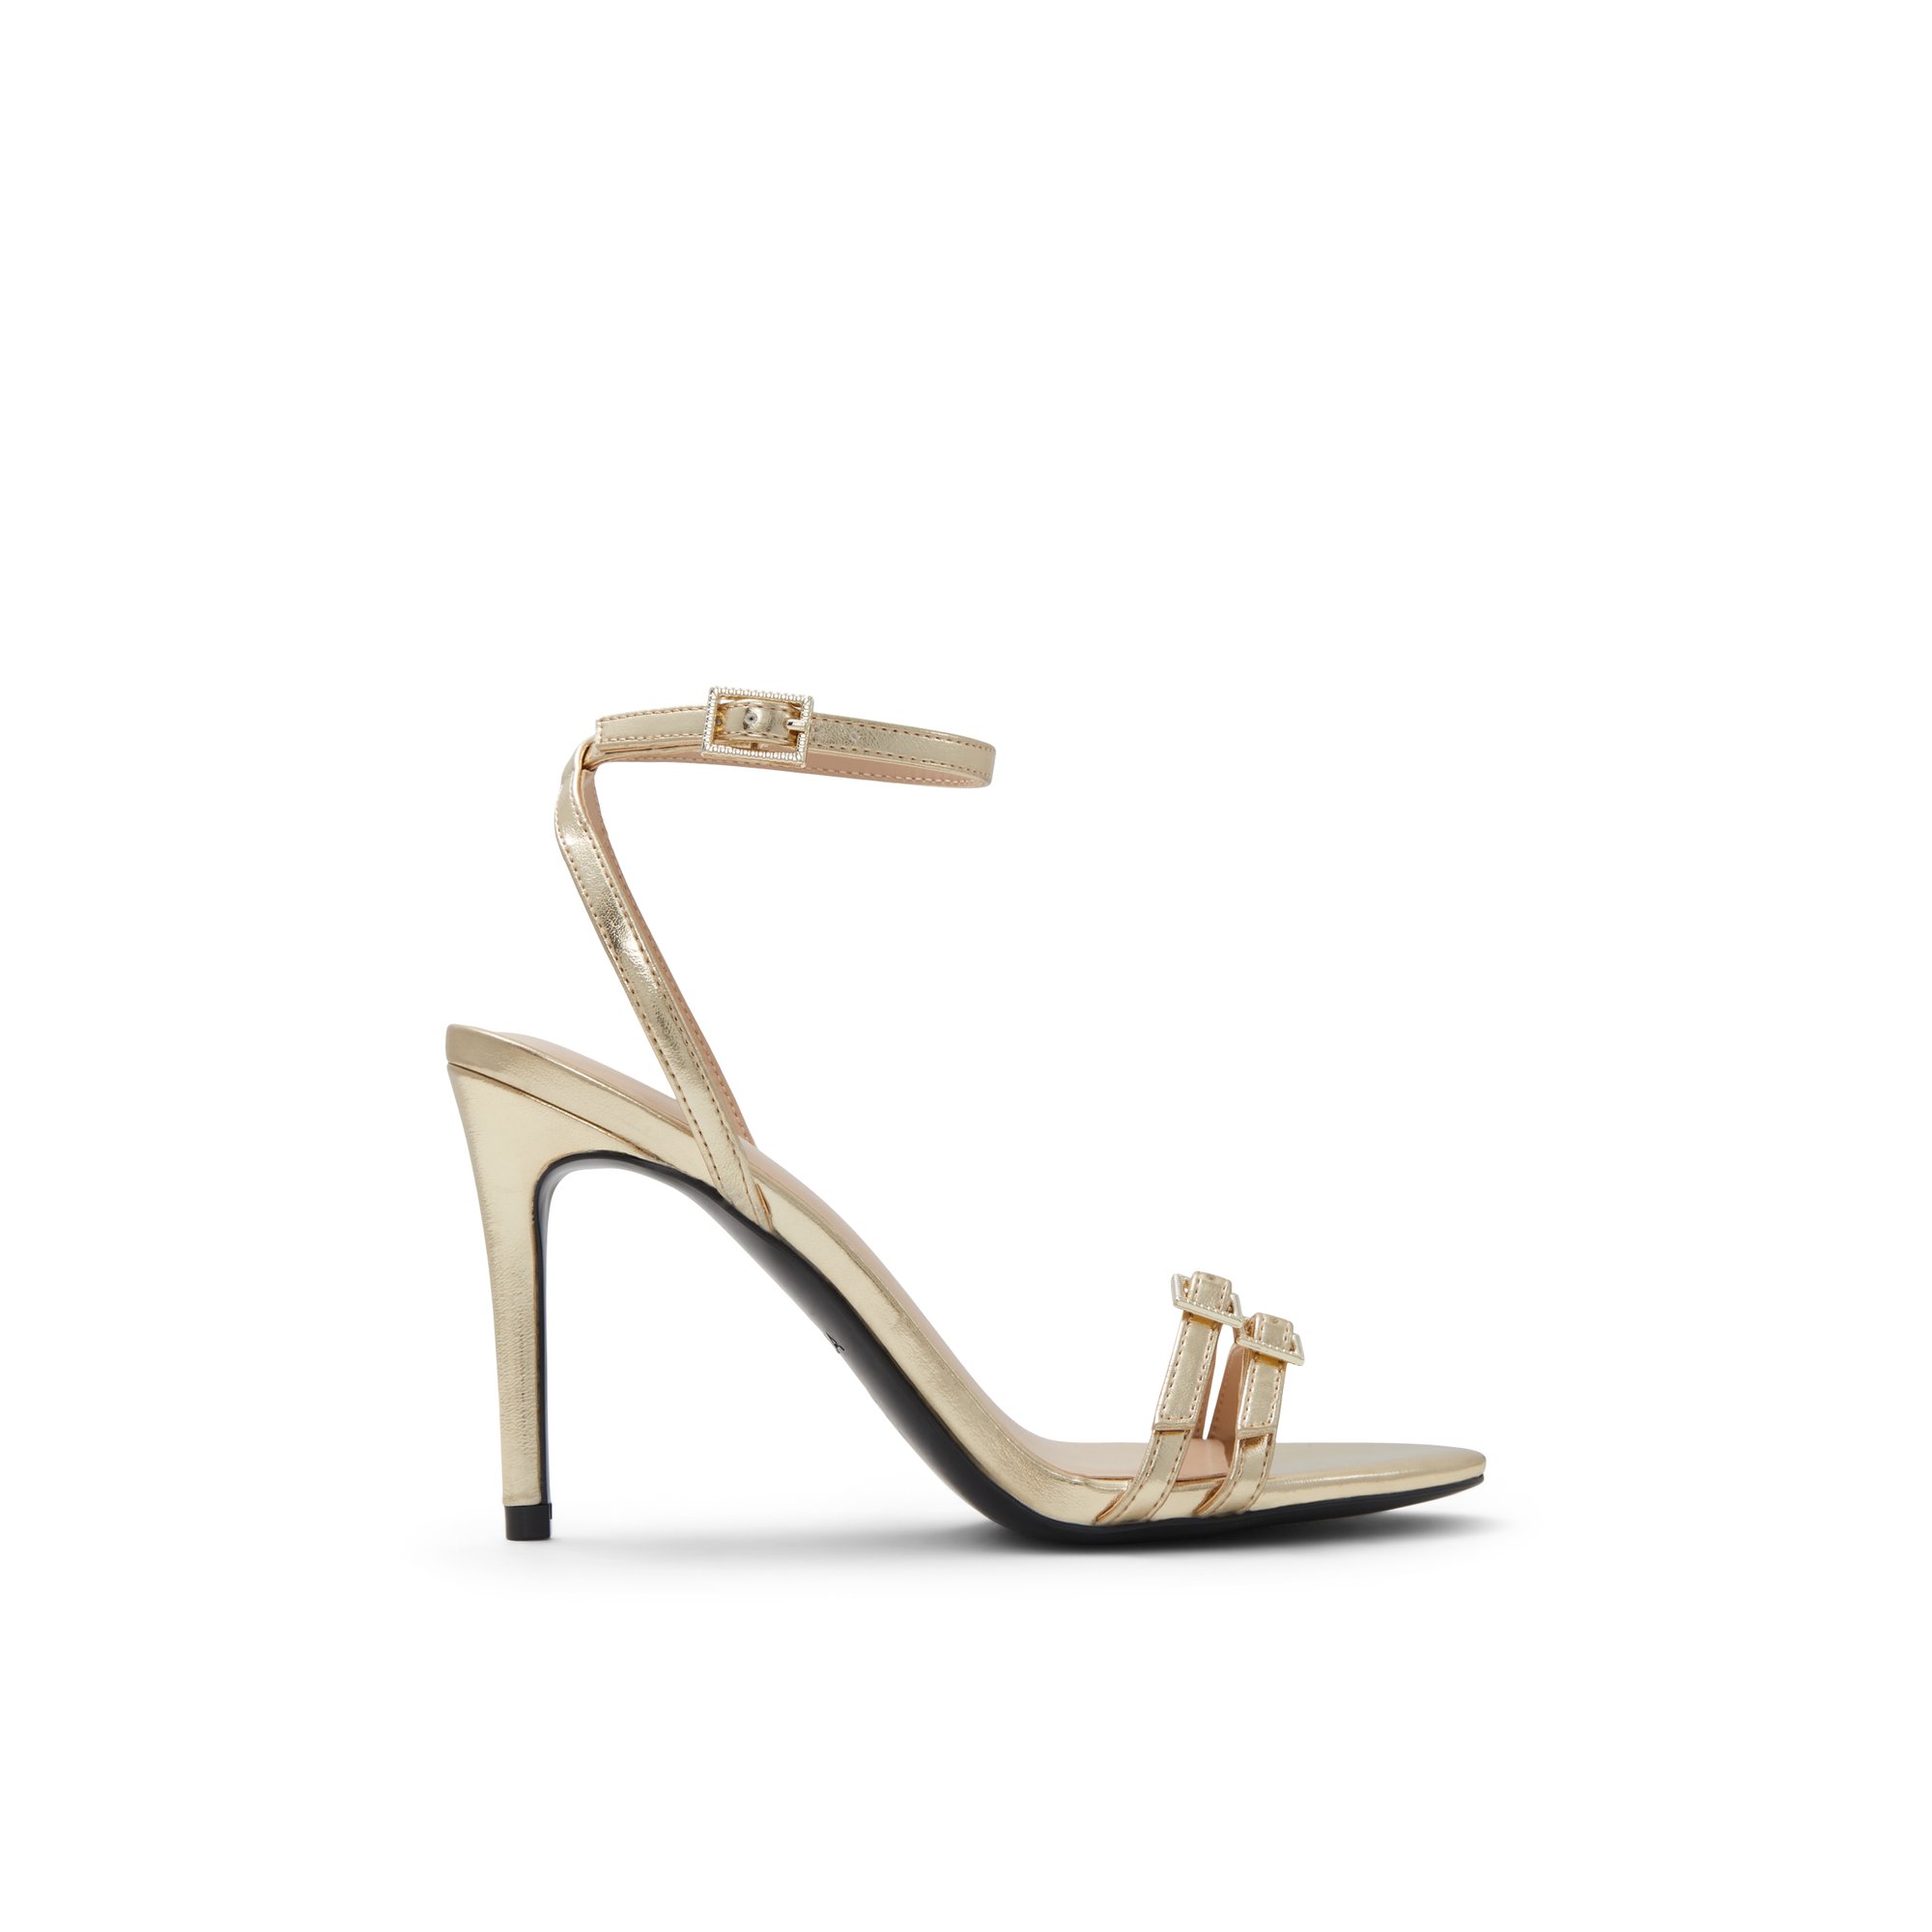 ALDO Graciee - Women's Strappy Sandal Sandals - Gold